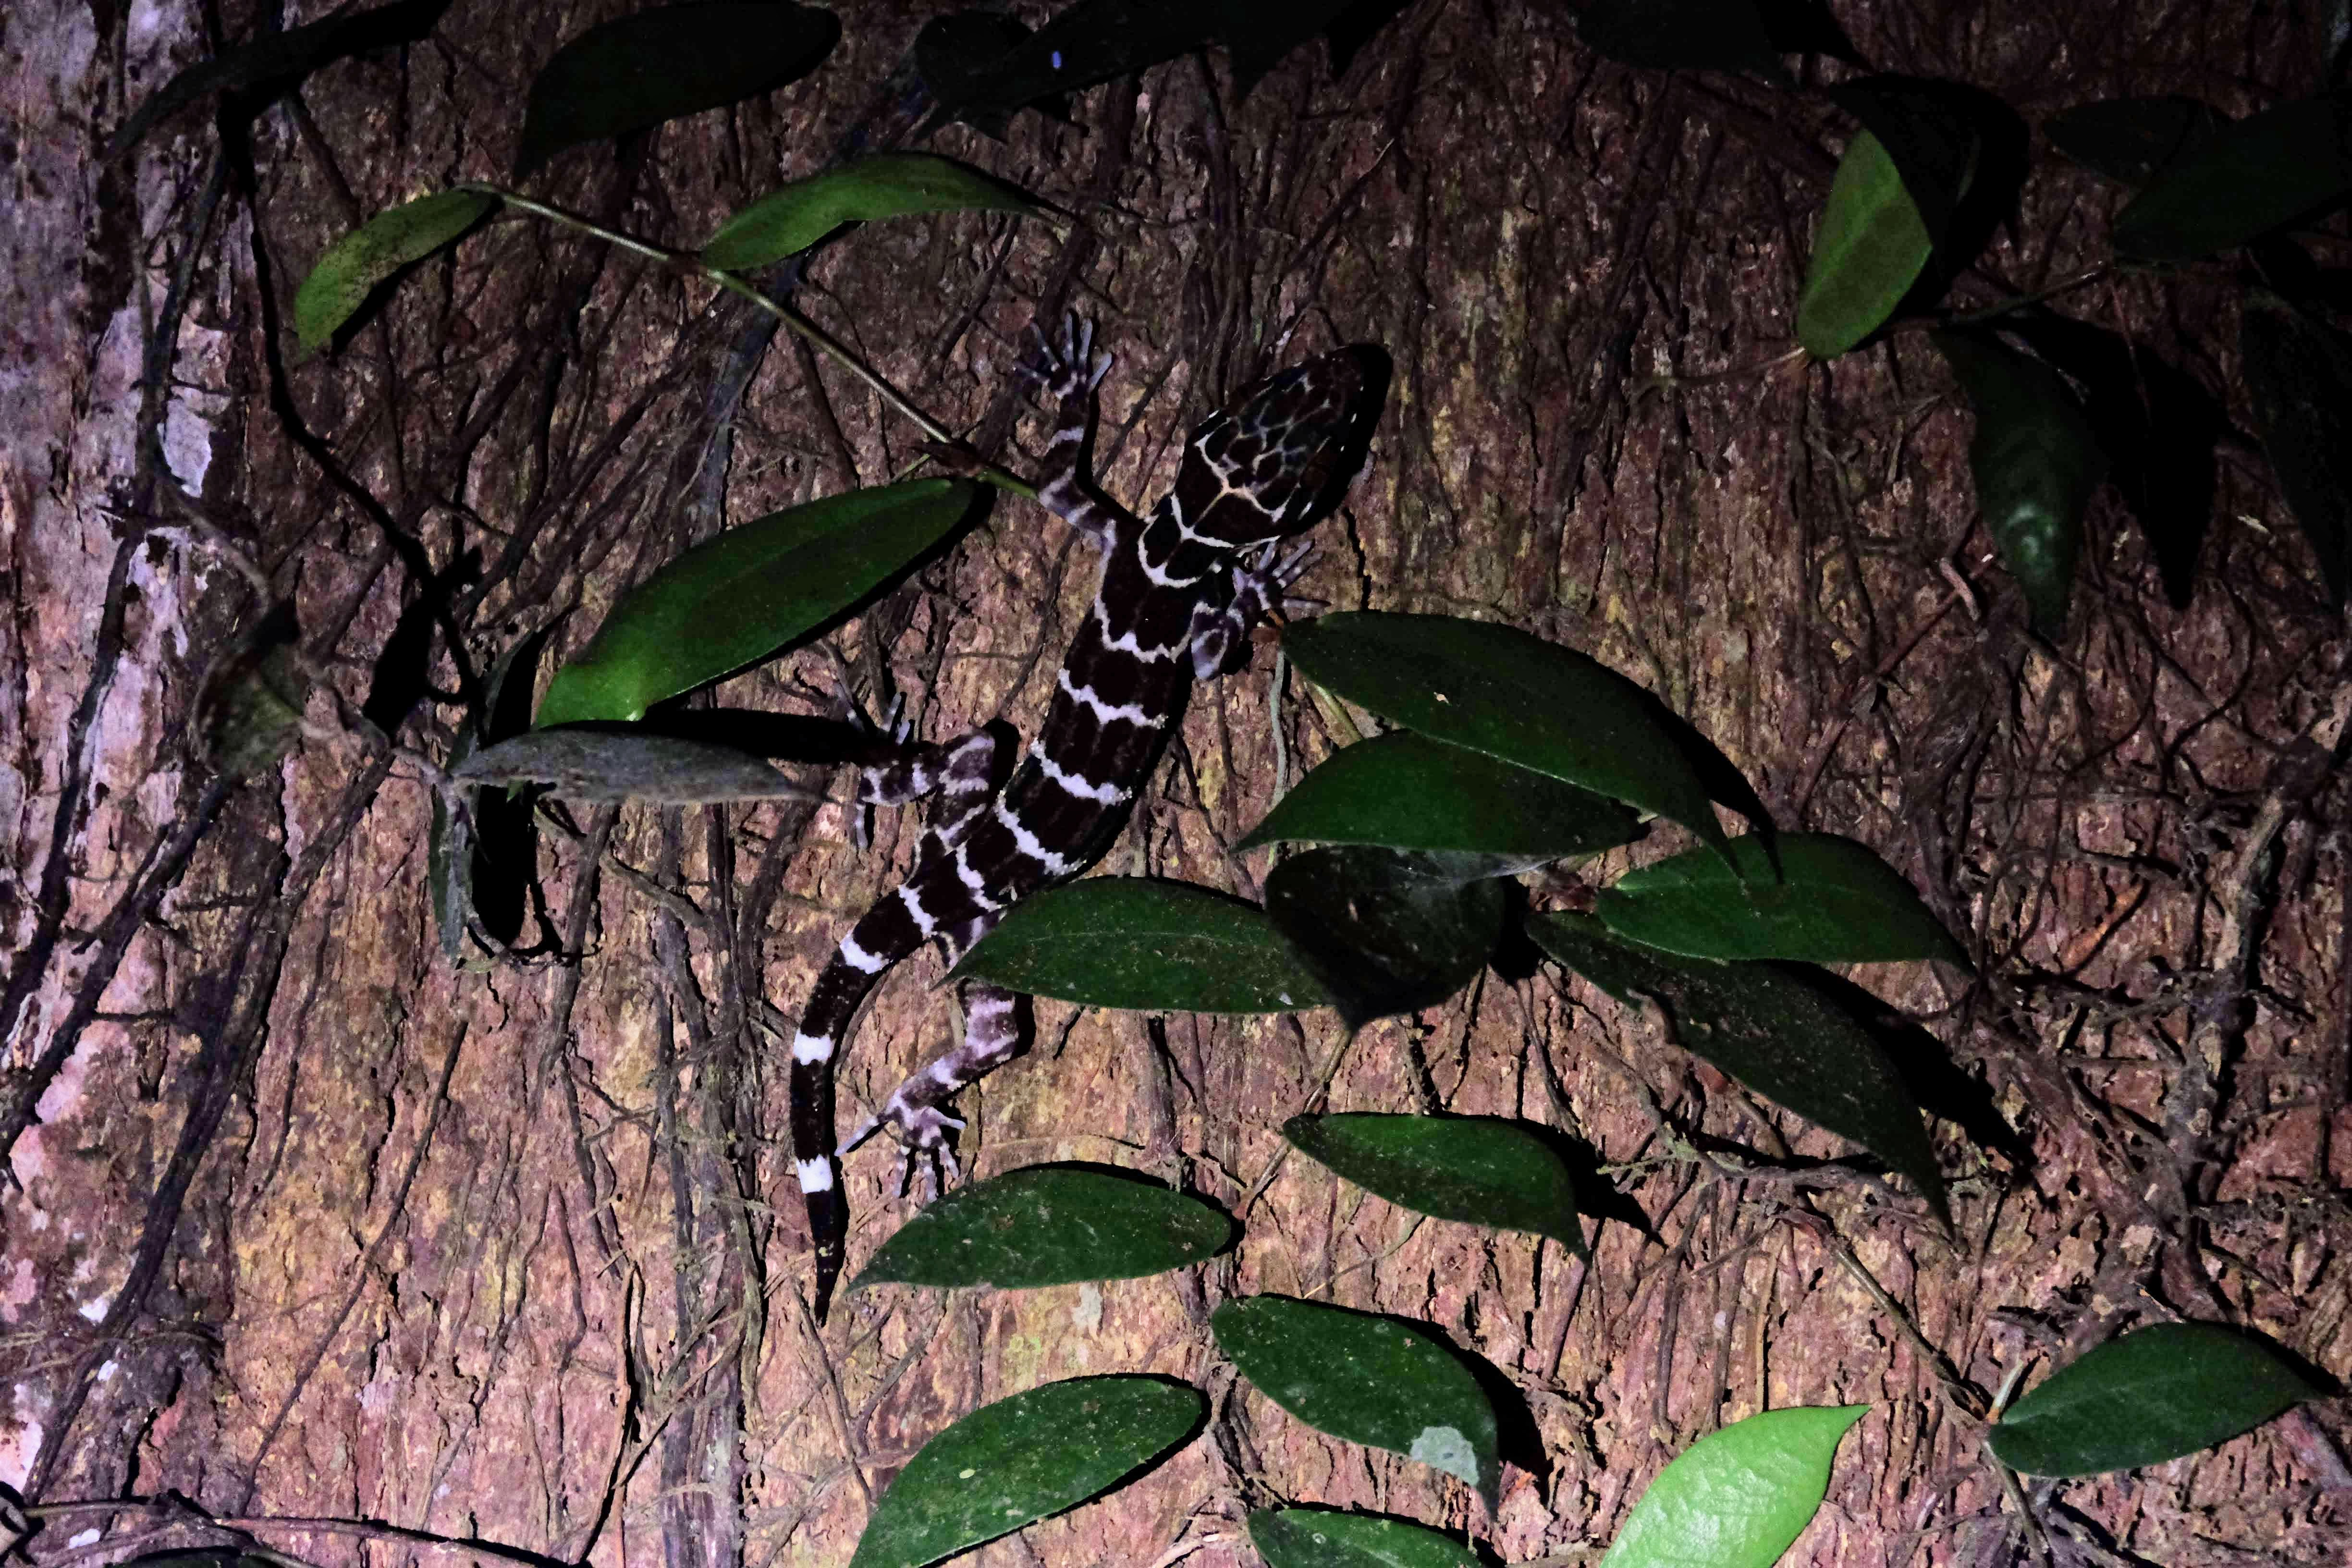 Banded forest gecko, Sepilok, Borneo